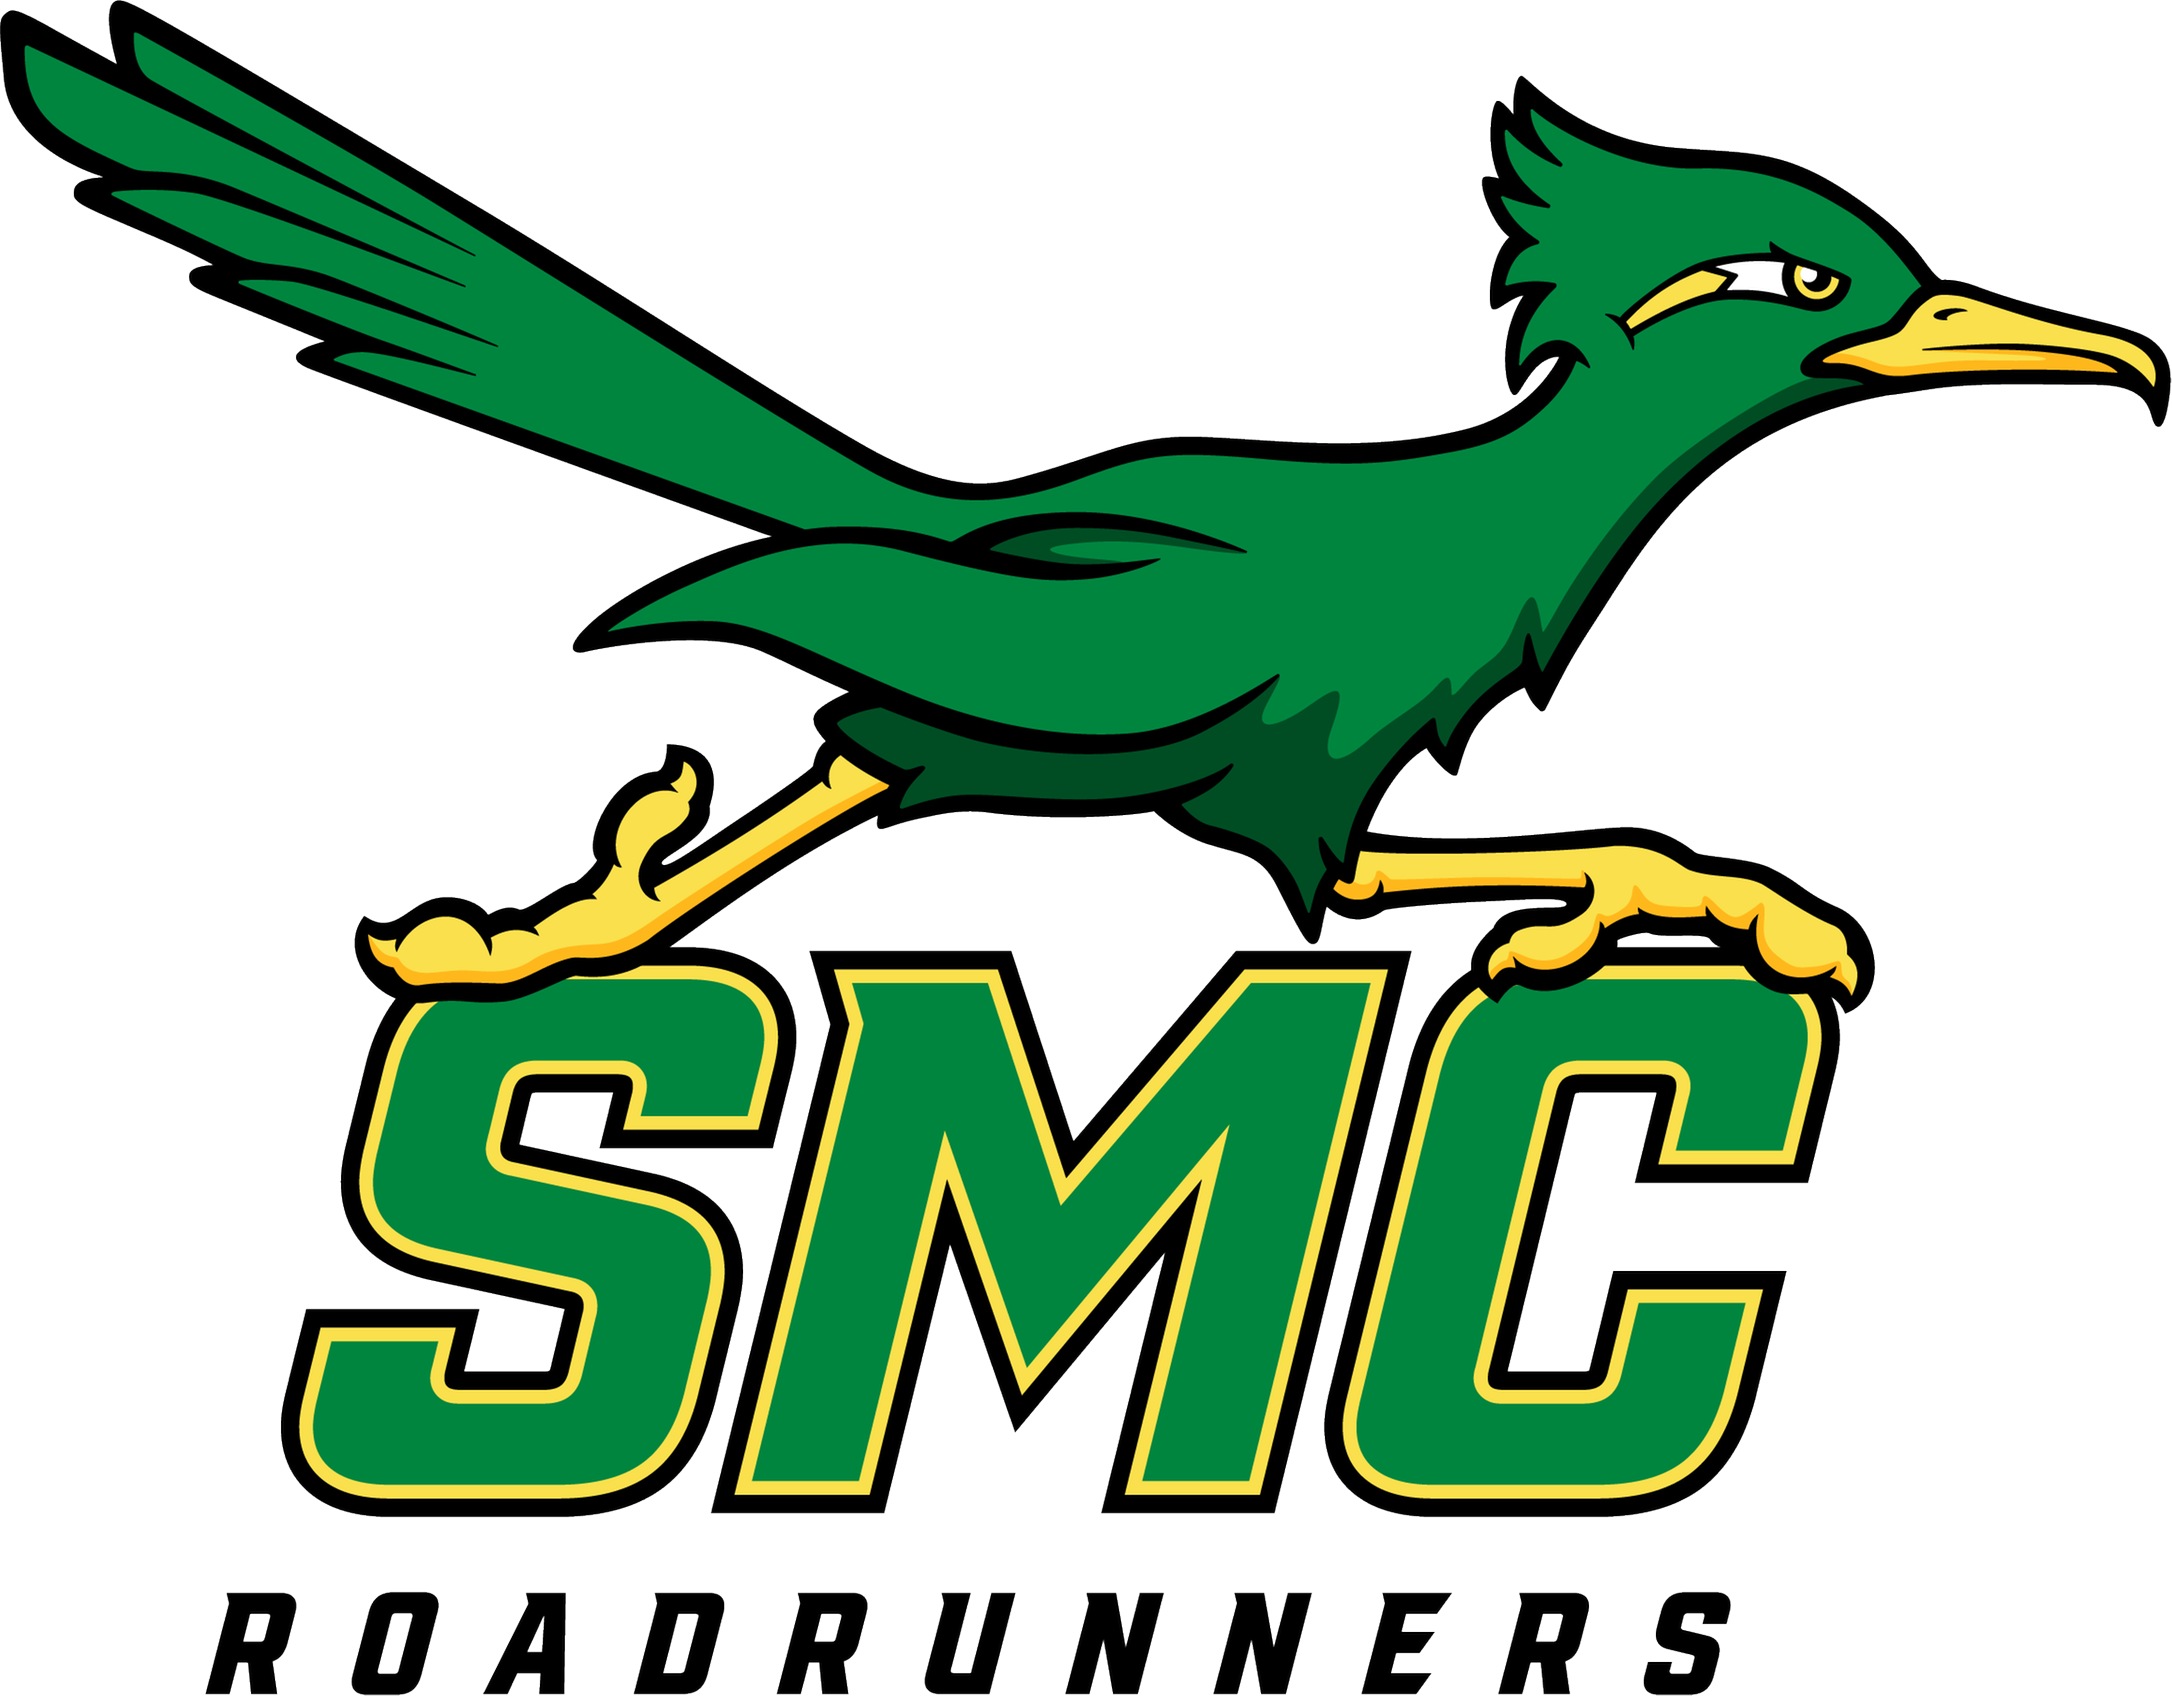 Southwextern Michigan College logo